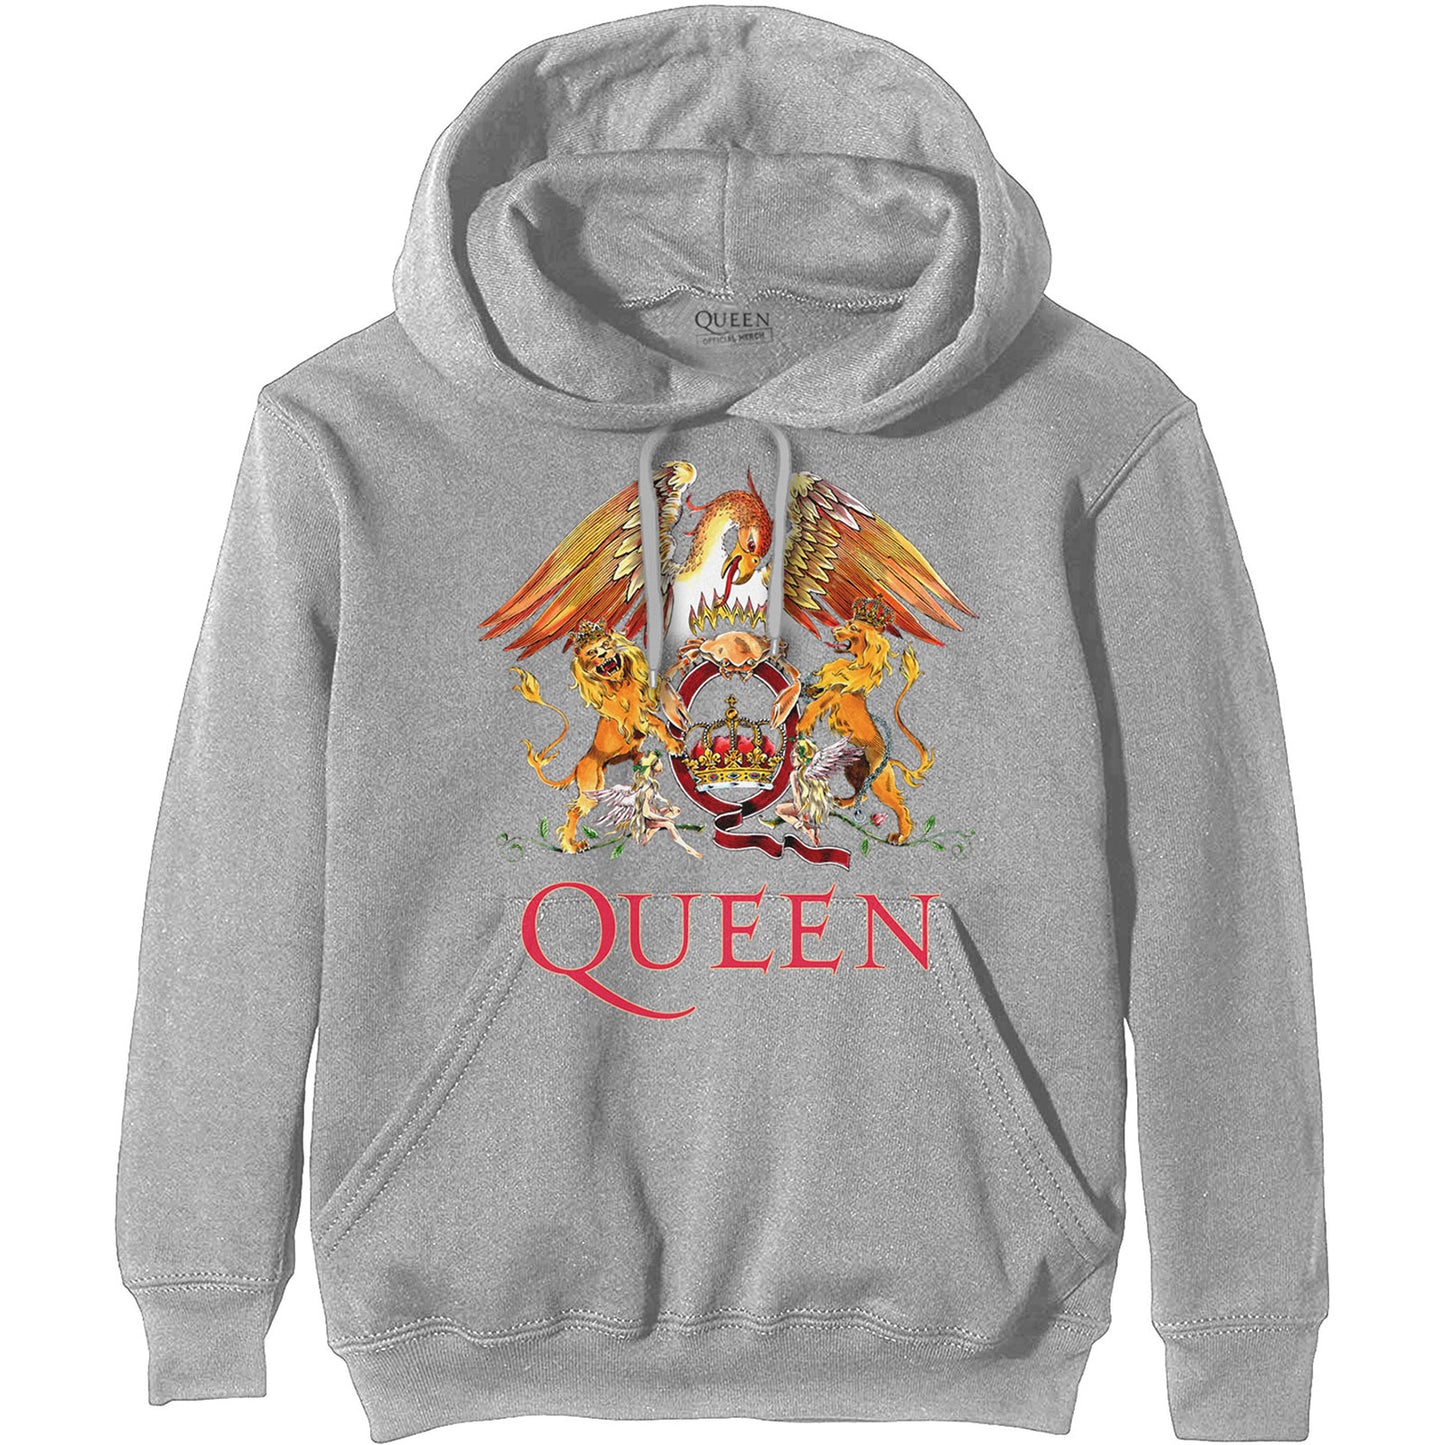 Queen Pullover Hoodie: Classic Crest